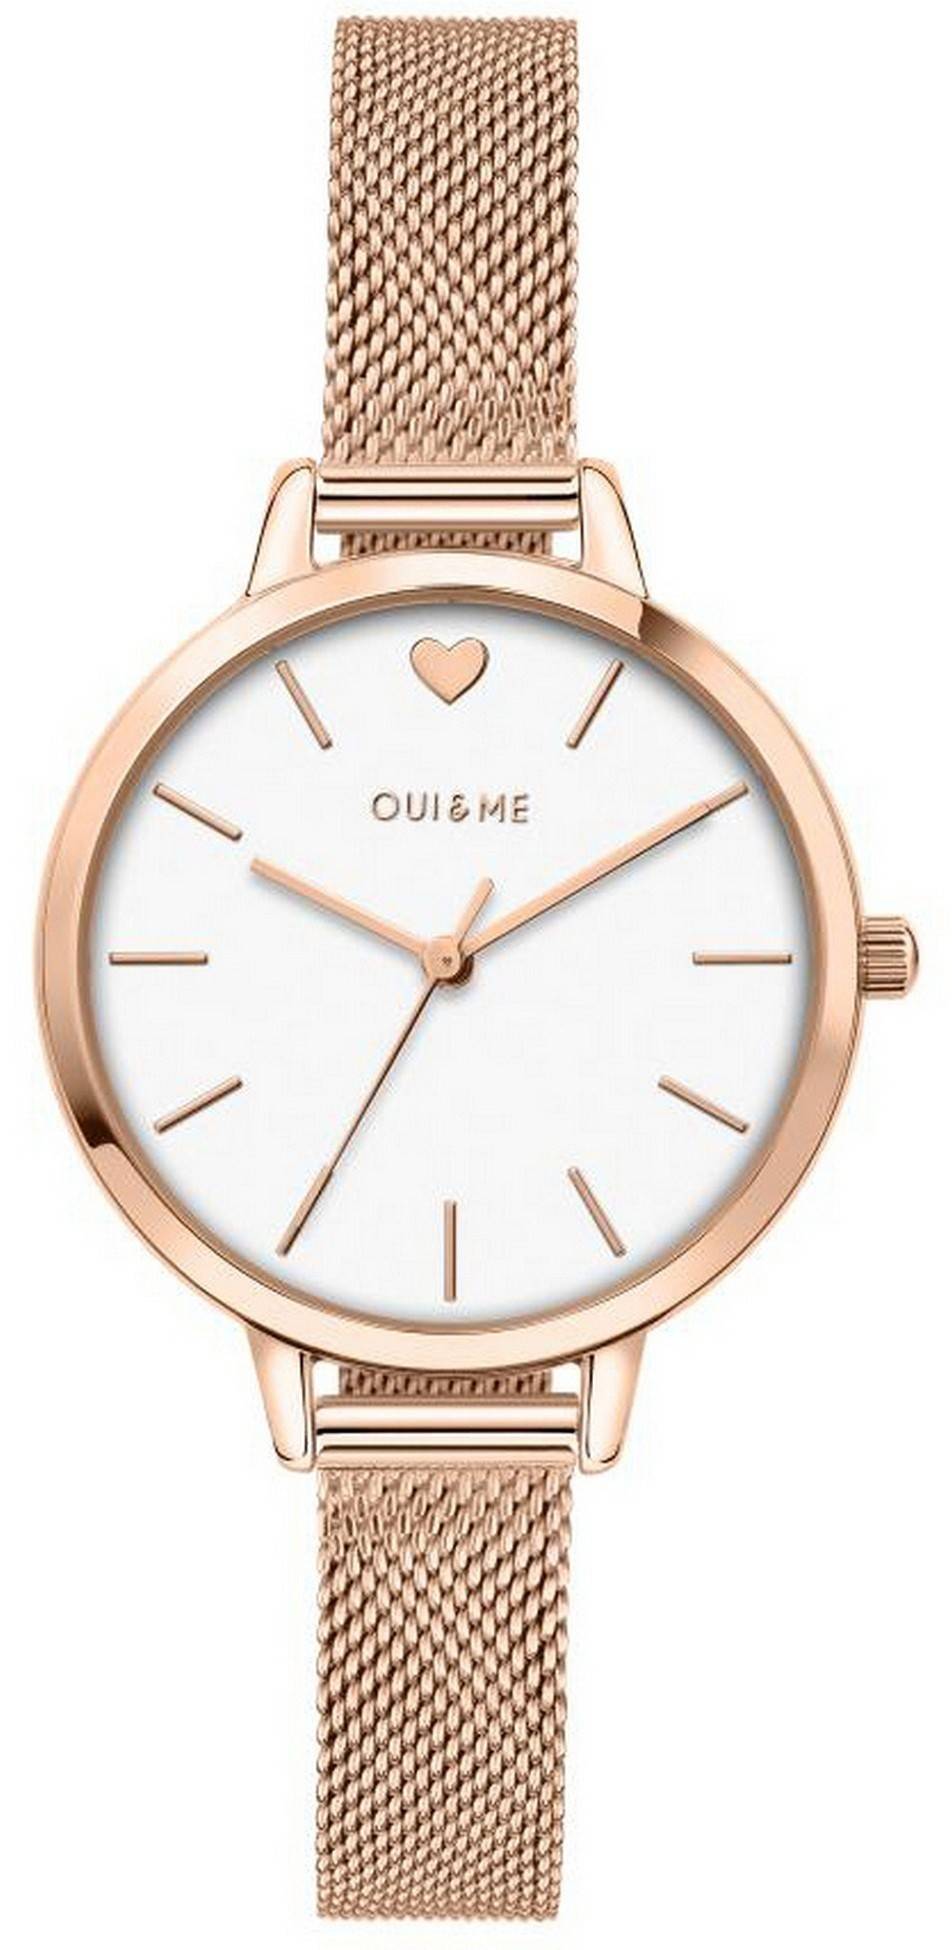 Oui & Me Petite Amourette White Dial Rose Gold Tone Stainless Steel Quartz ME010051 Women's Watch